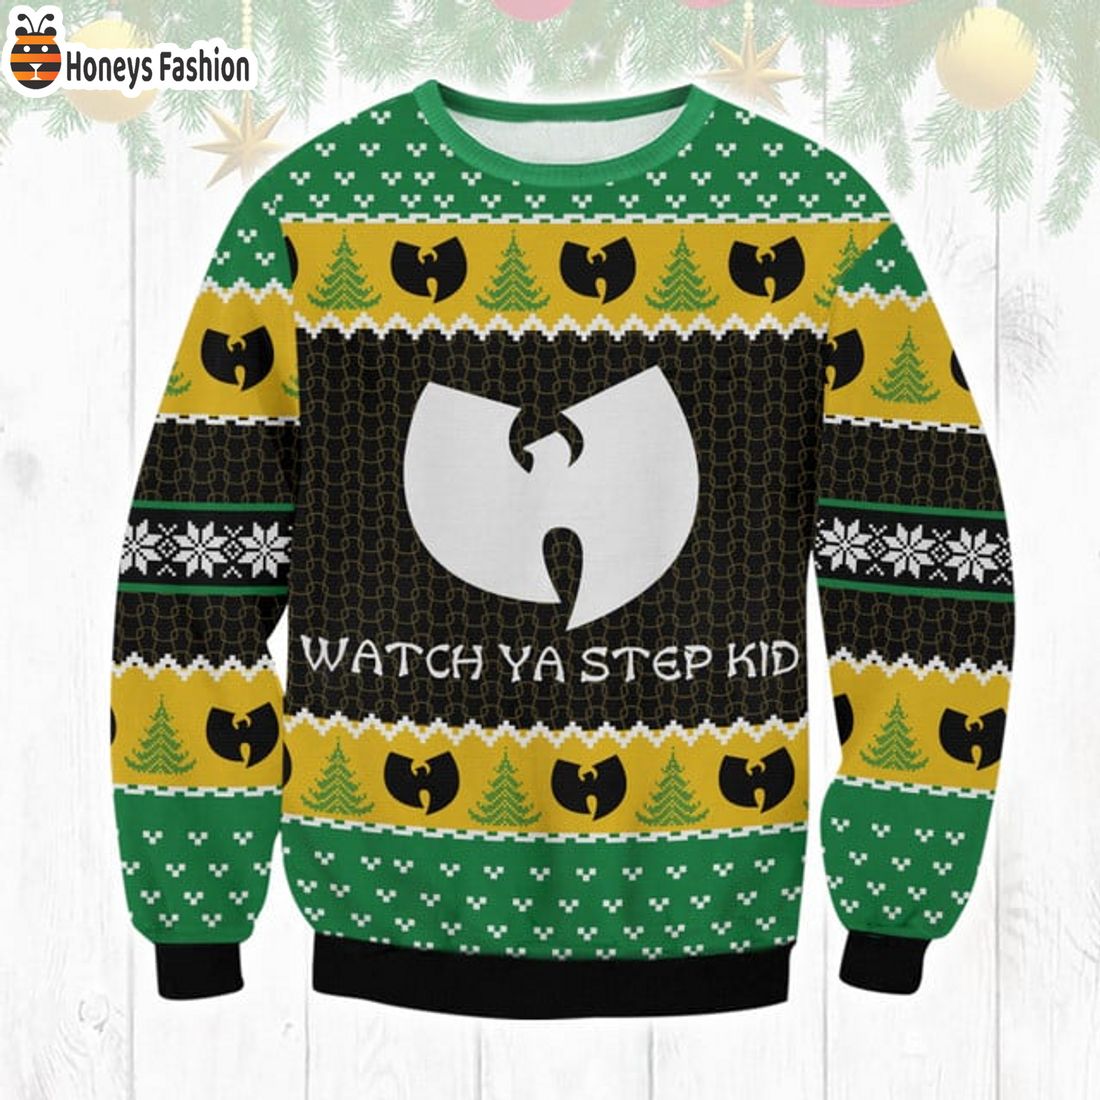 TOP SELLER Wu Tang Watch Ya Step Kid Ugly Christmas Sweater